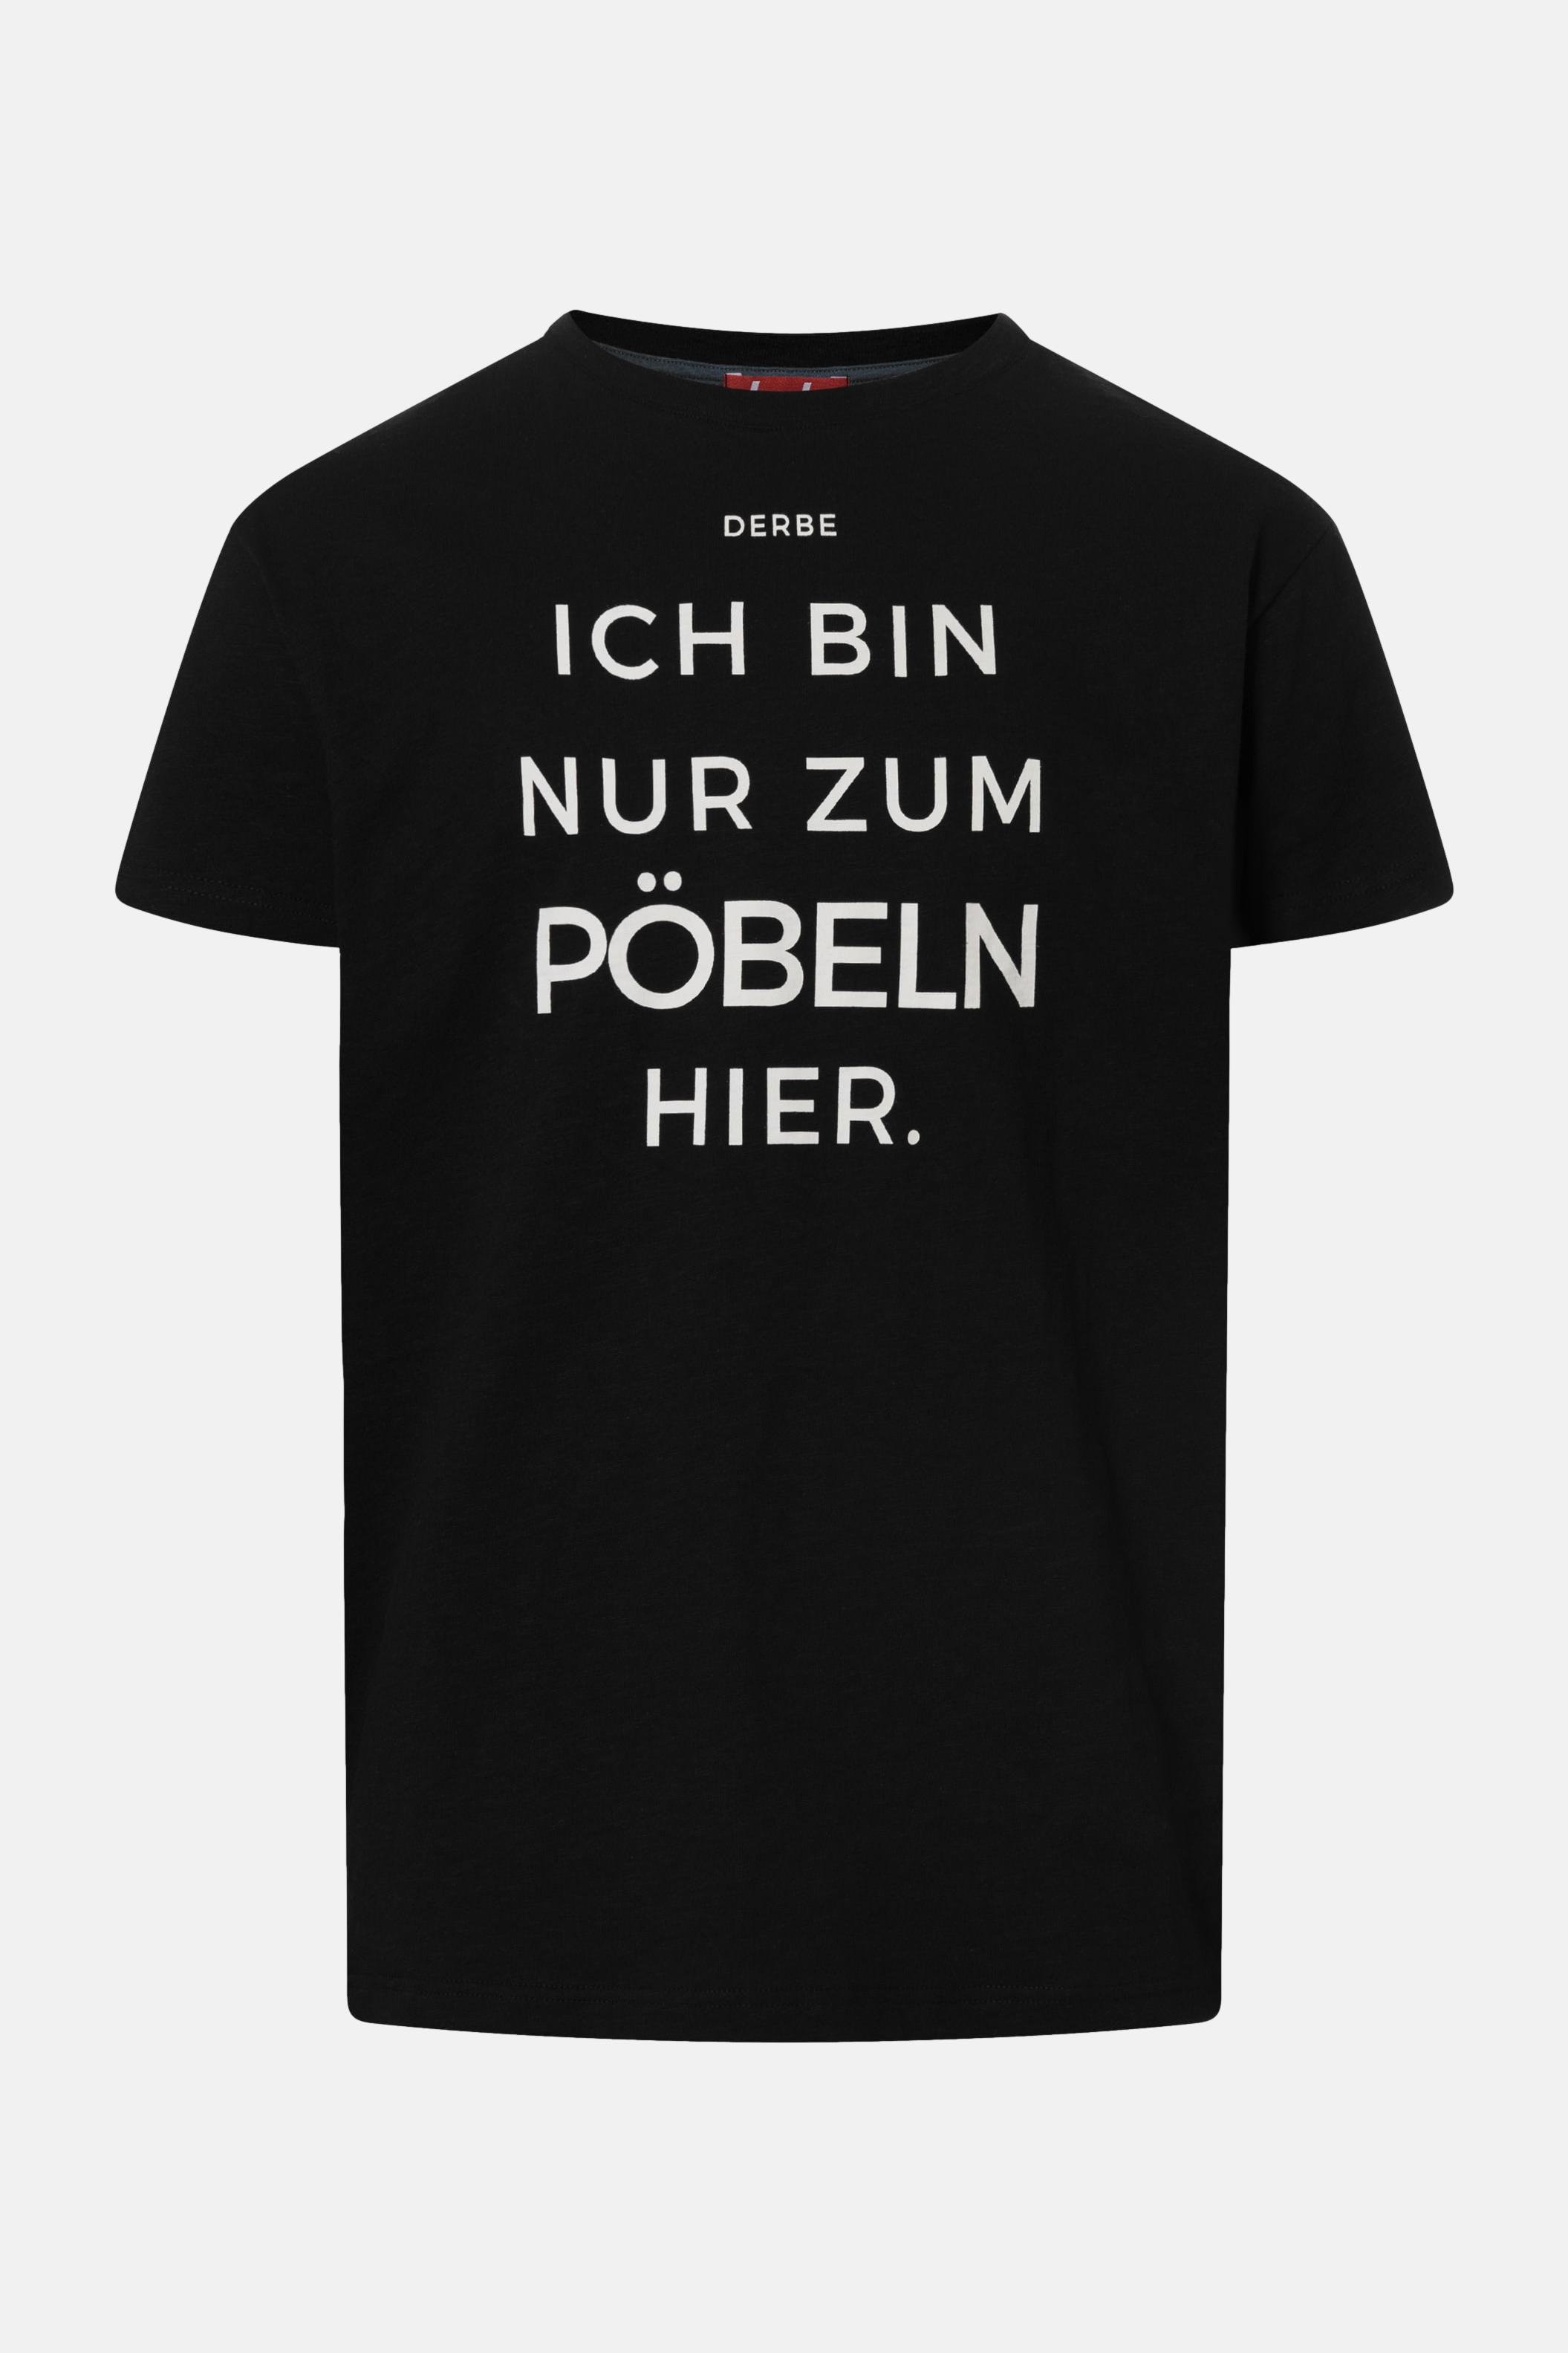 Black T-Shirt Pöbeln Herren Schwarz |